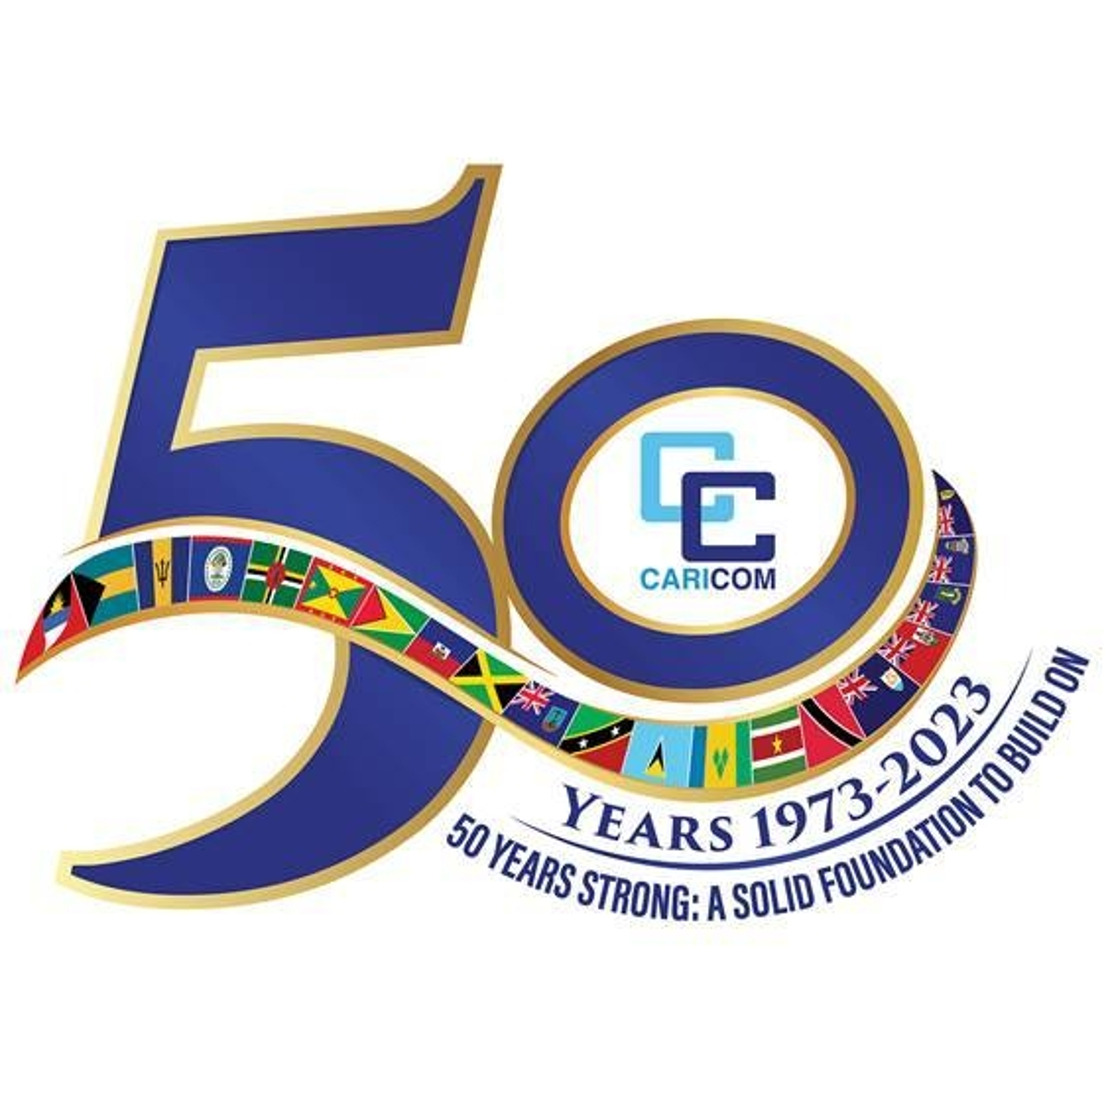 OECS congratulates CARICOM on its 50th Anniversary